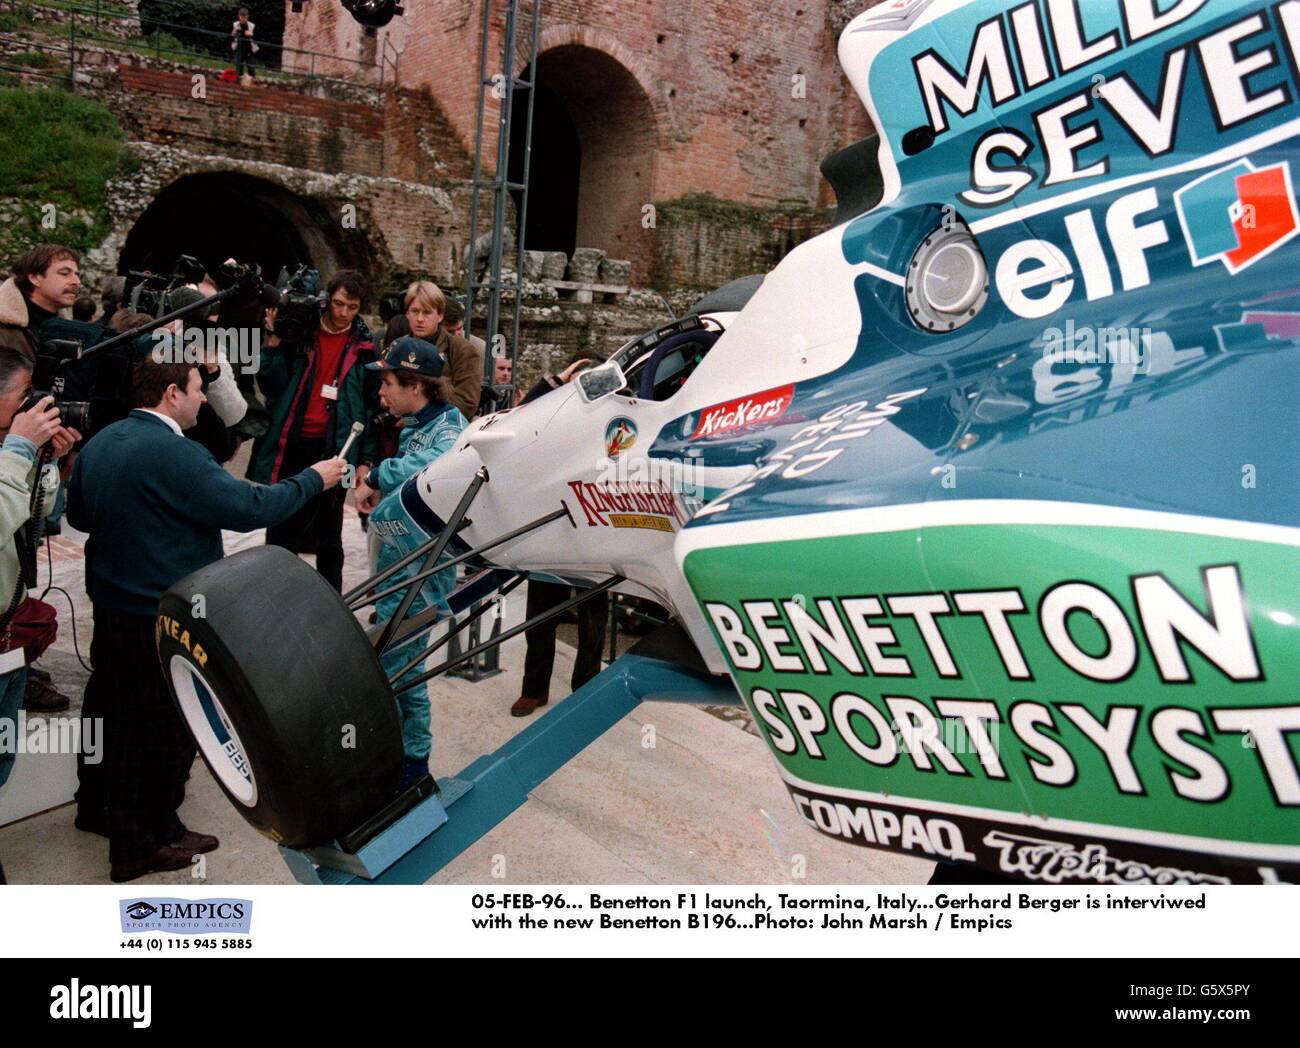 Benetton F1 press Release Pack 